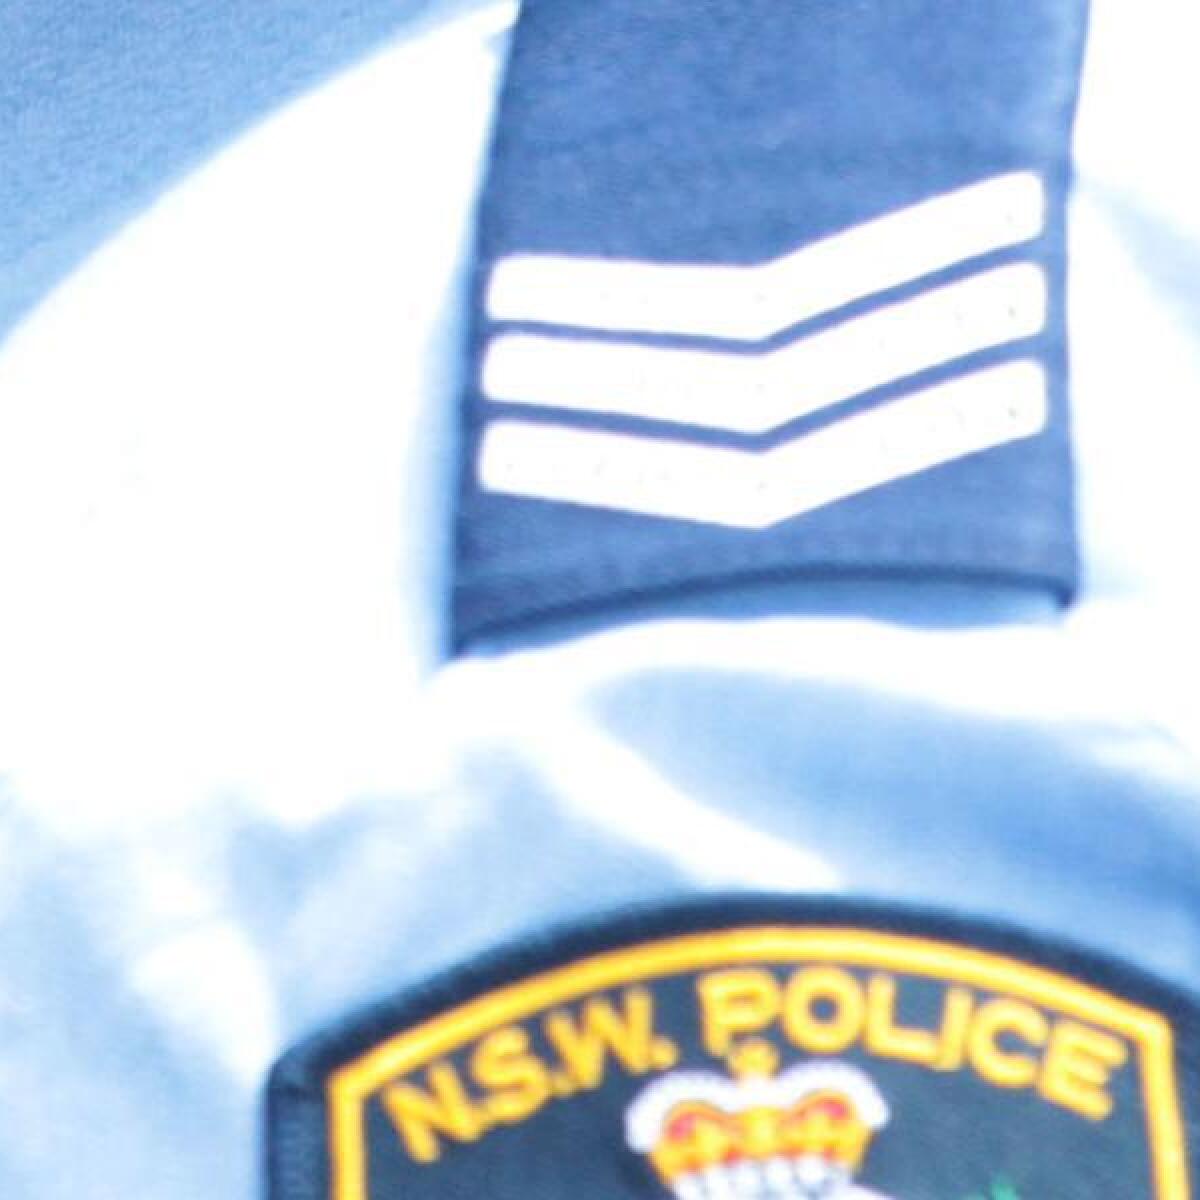 Police sergeant's stripes (file image)